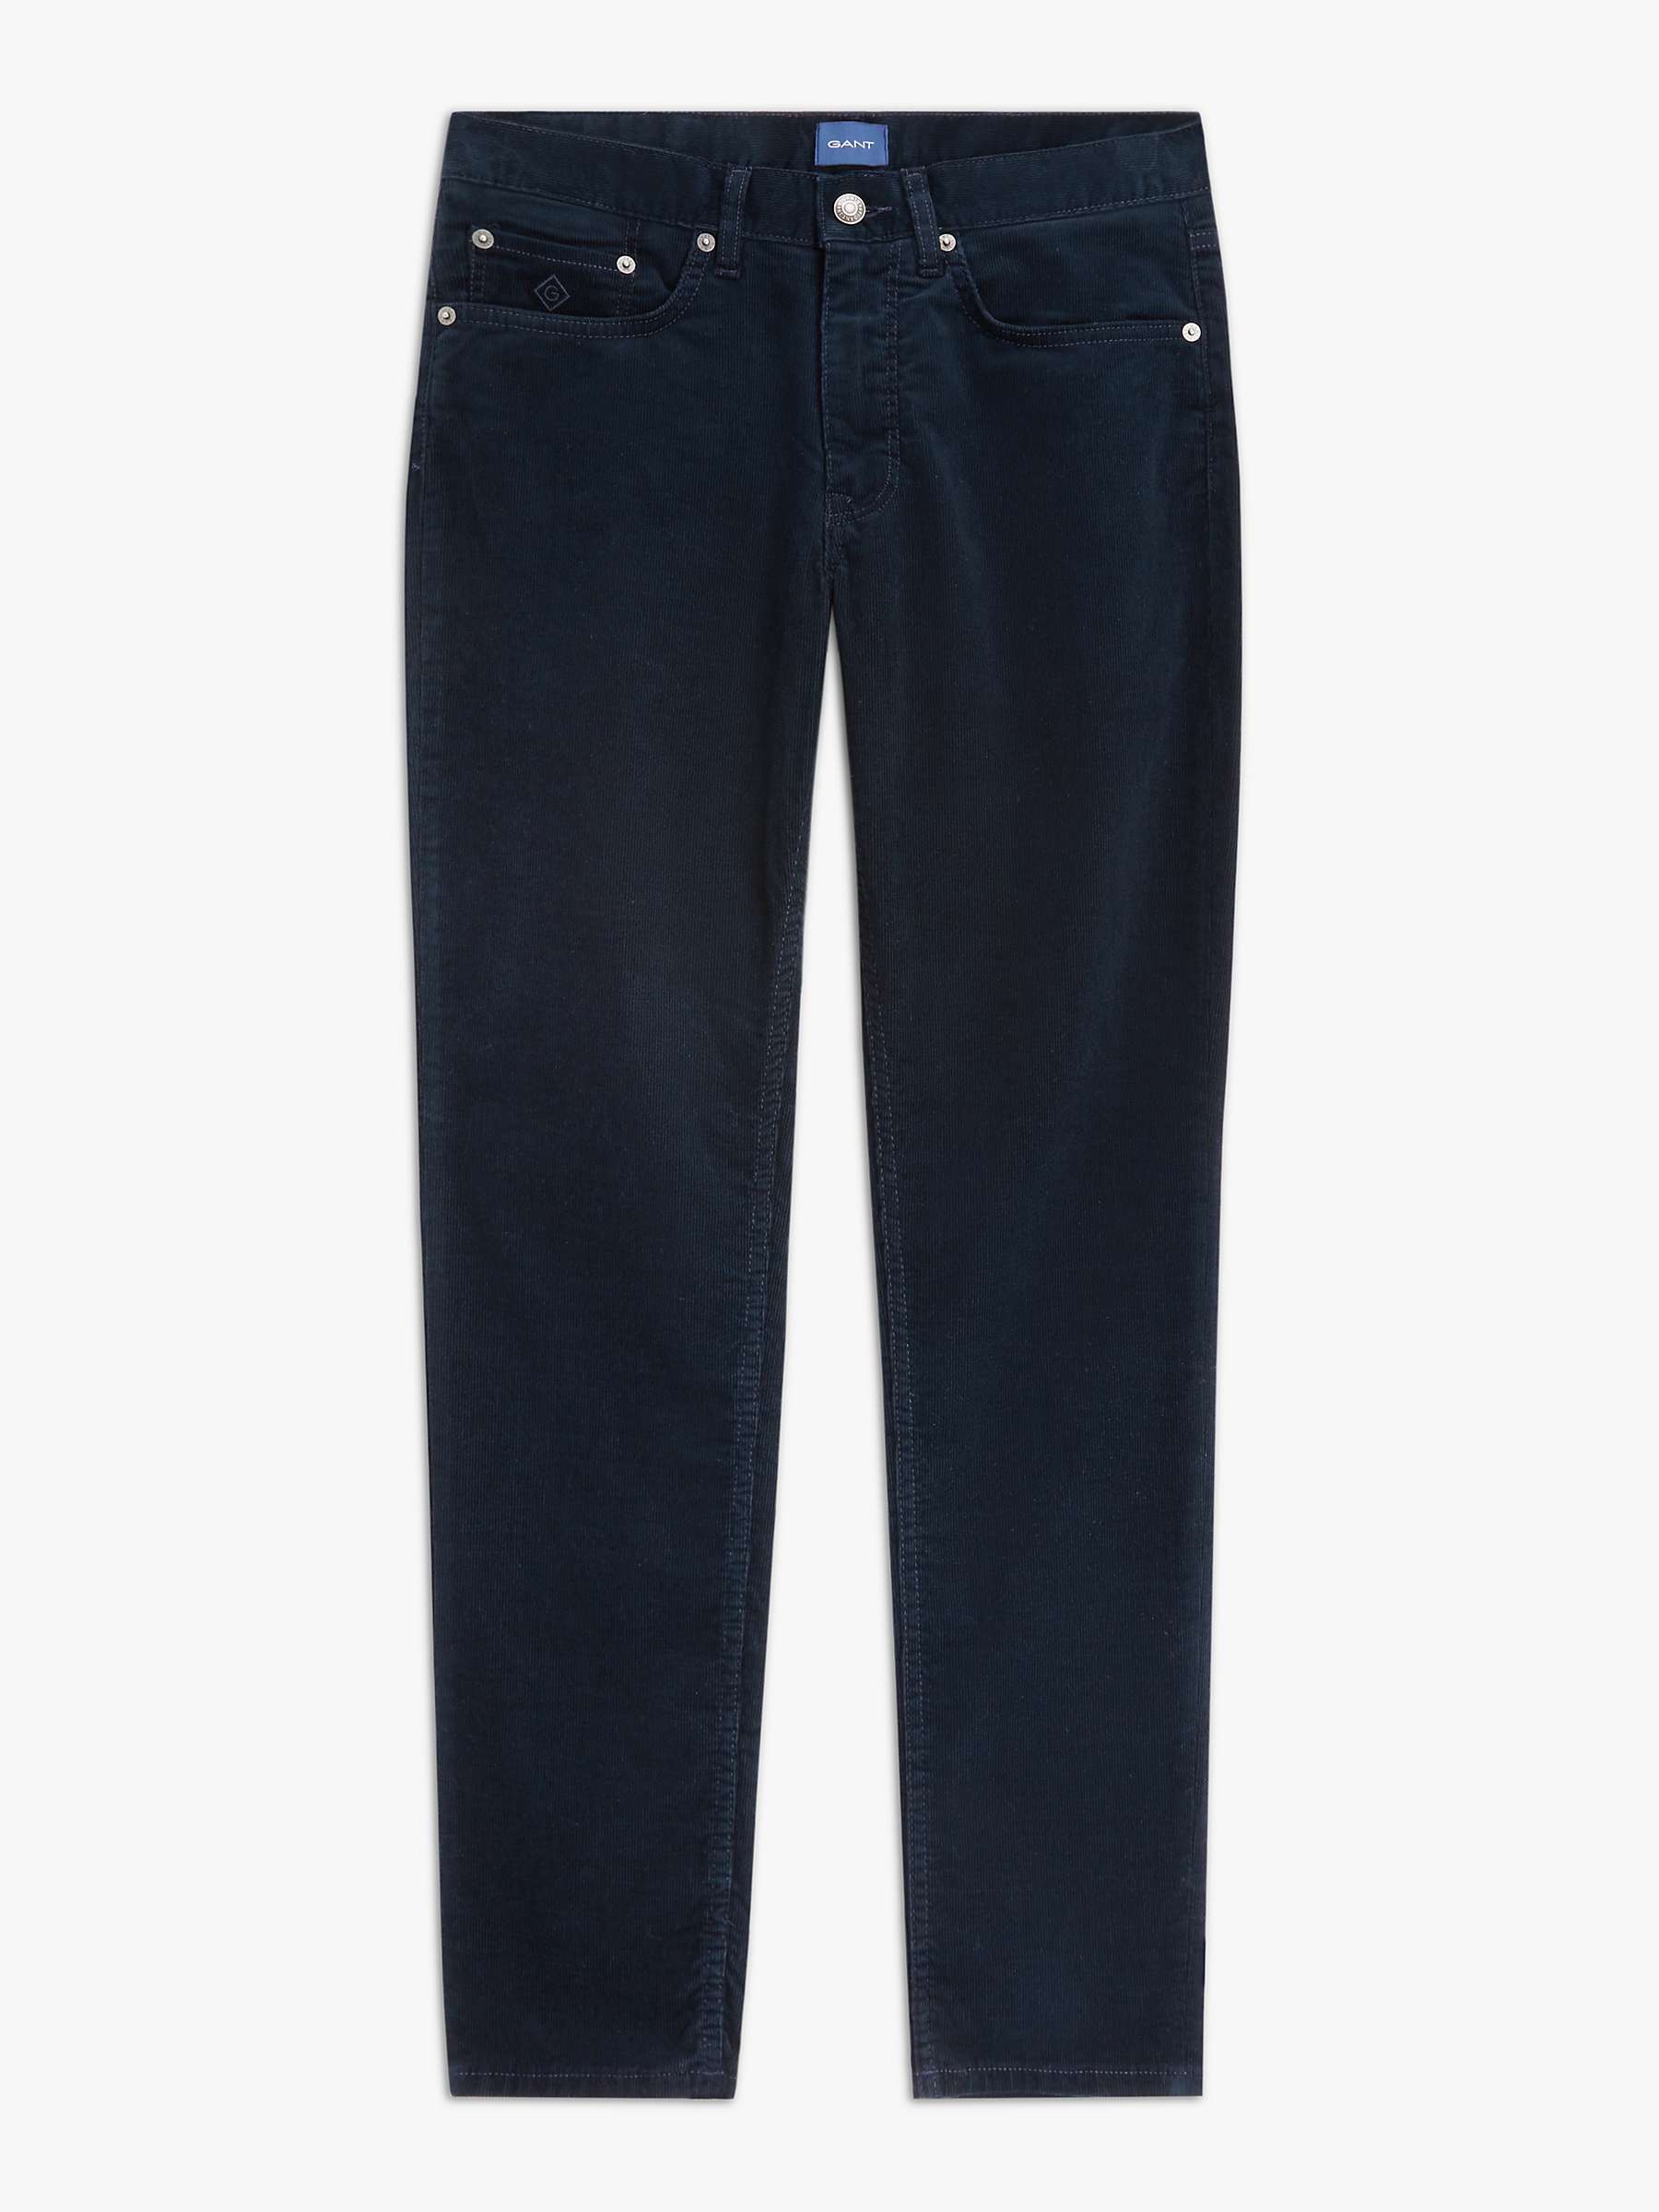 Hayes Cord Jeans Pantaloni Eleganti da Uomo Visita lo Store di GantGANT D1 Anthrazit 46^48 